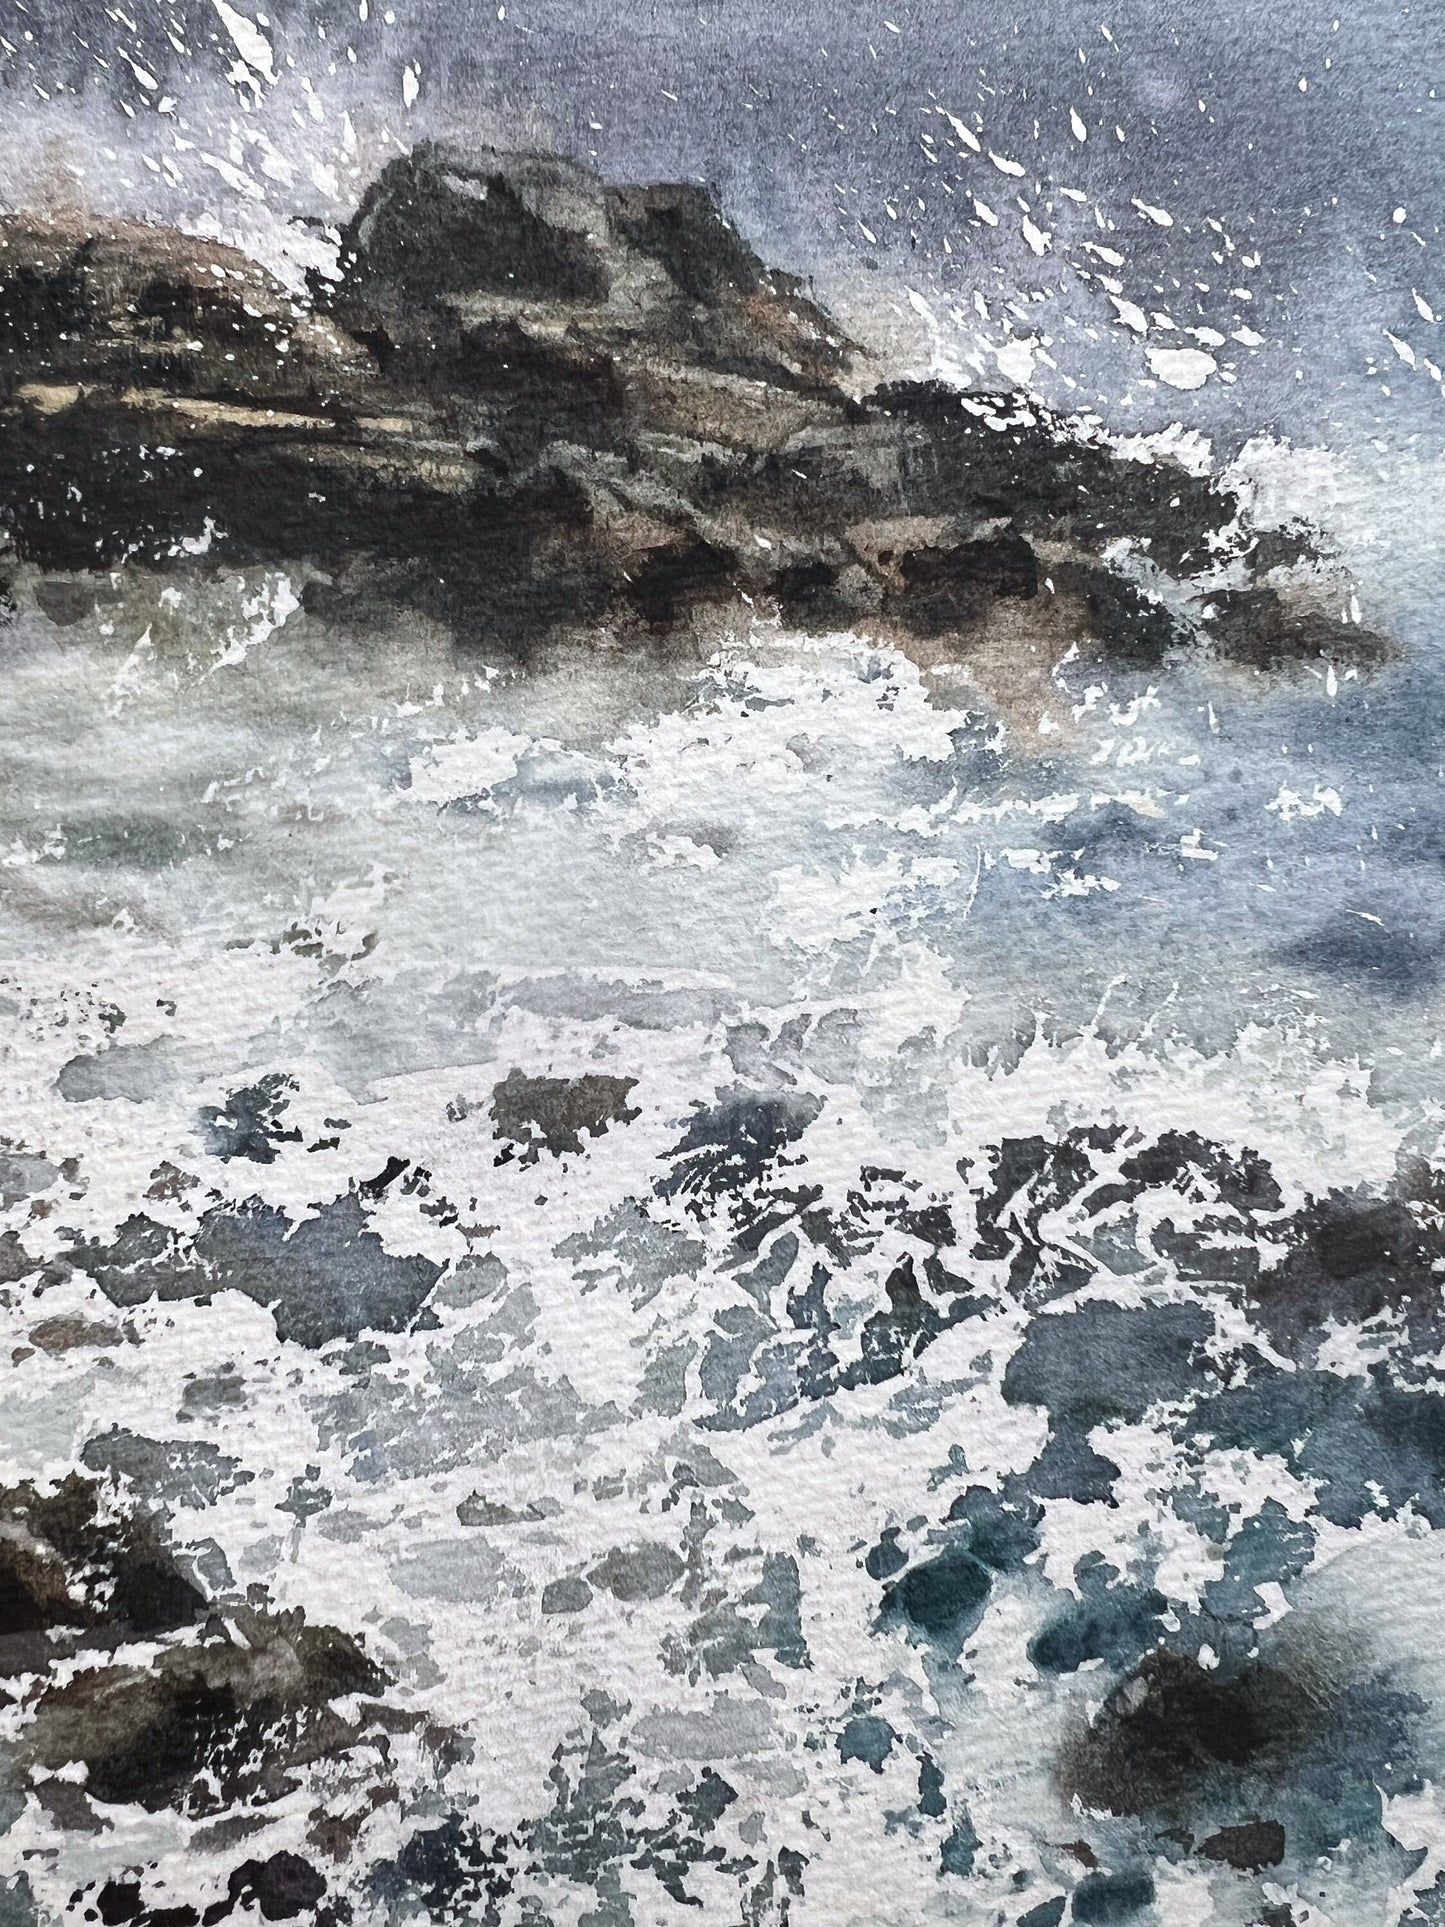 Waves and Rocks Painting, Watercolor Original Artwork, Blue Sea Art, Seascape, Coast, Hand-painted Ocean Home Decor